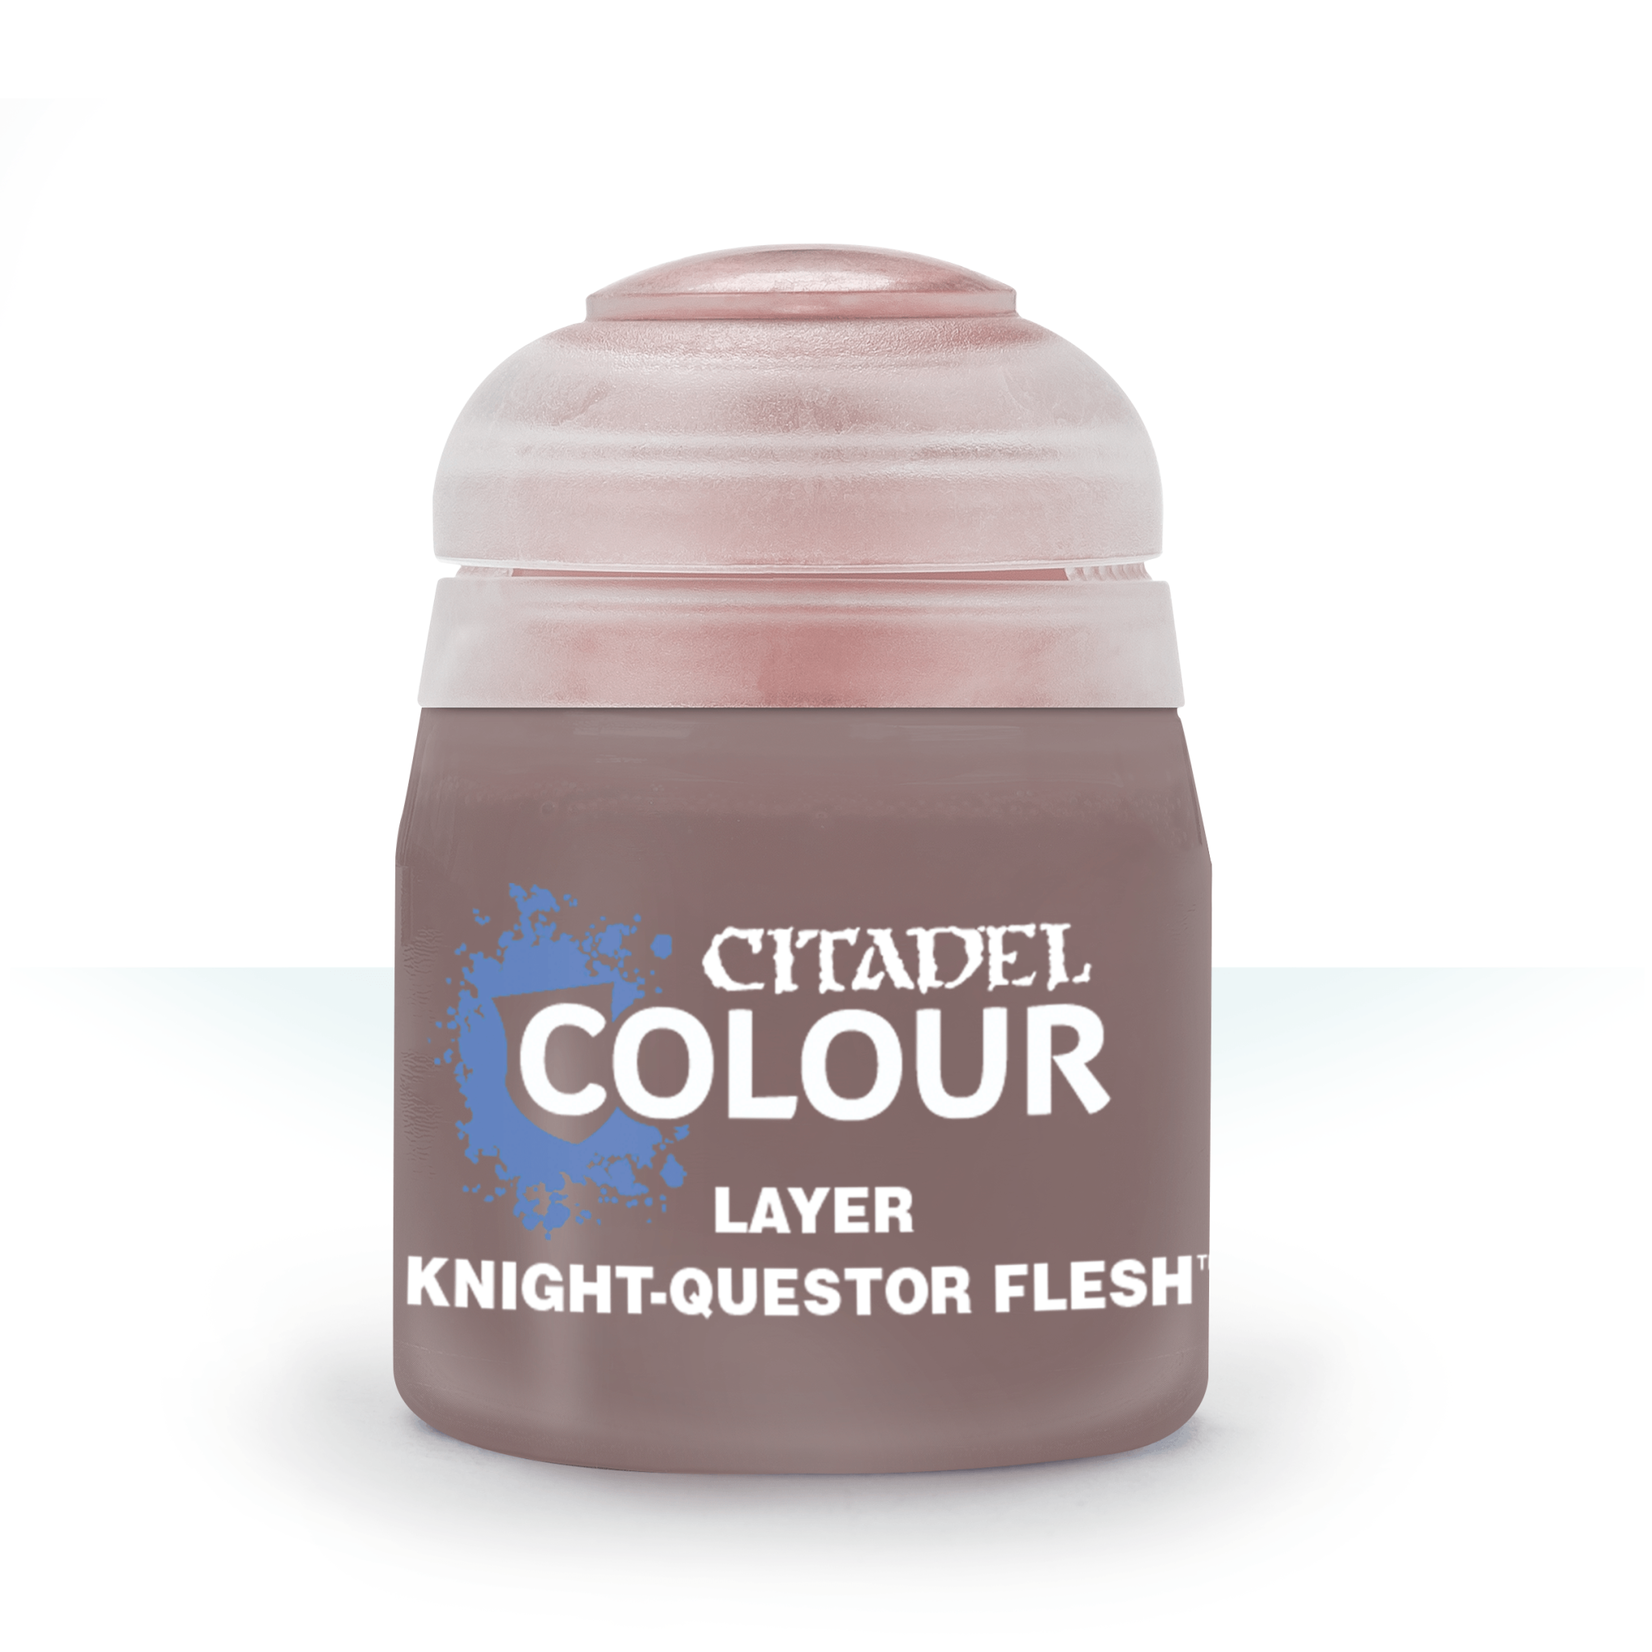 Citadel Layer Knight-Questor Flesh 12ml pot